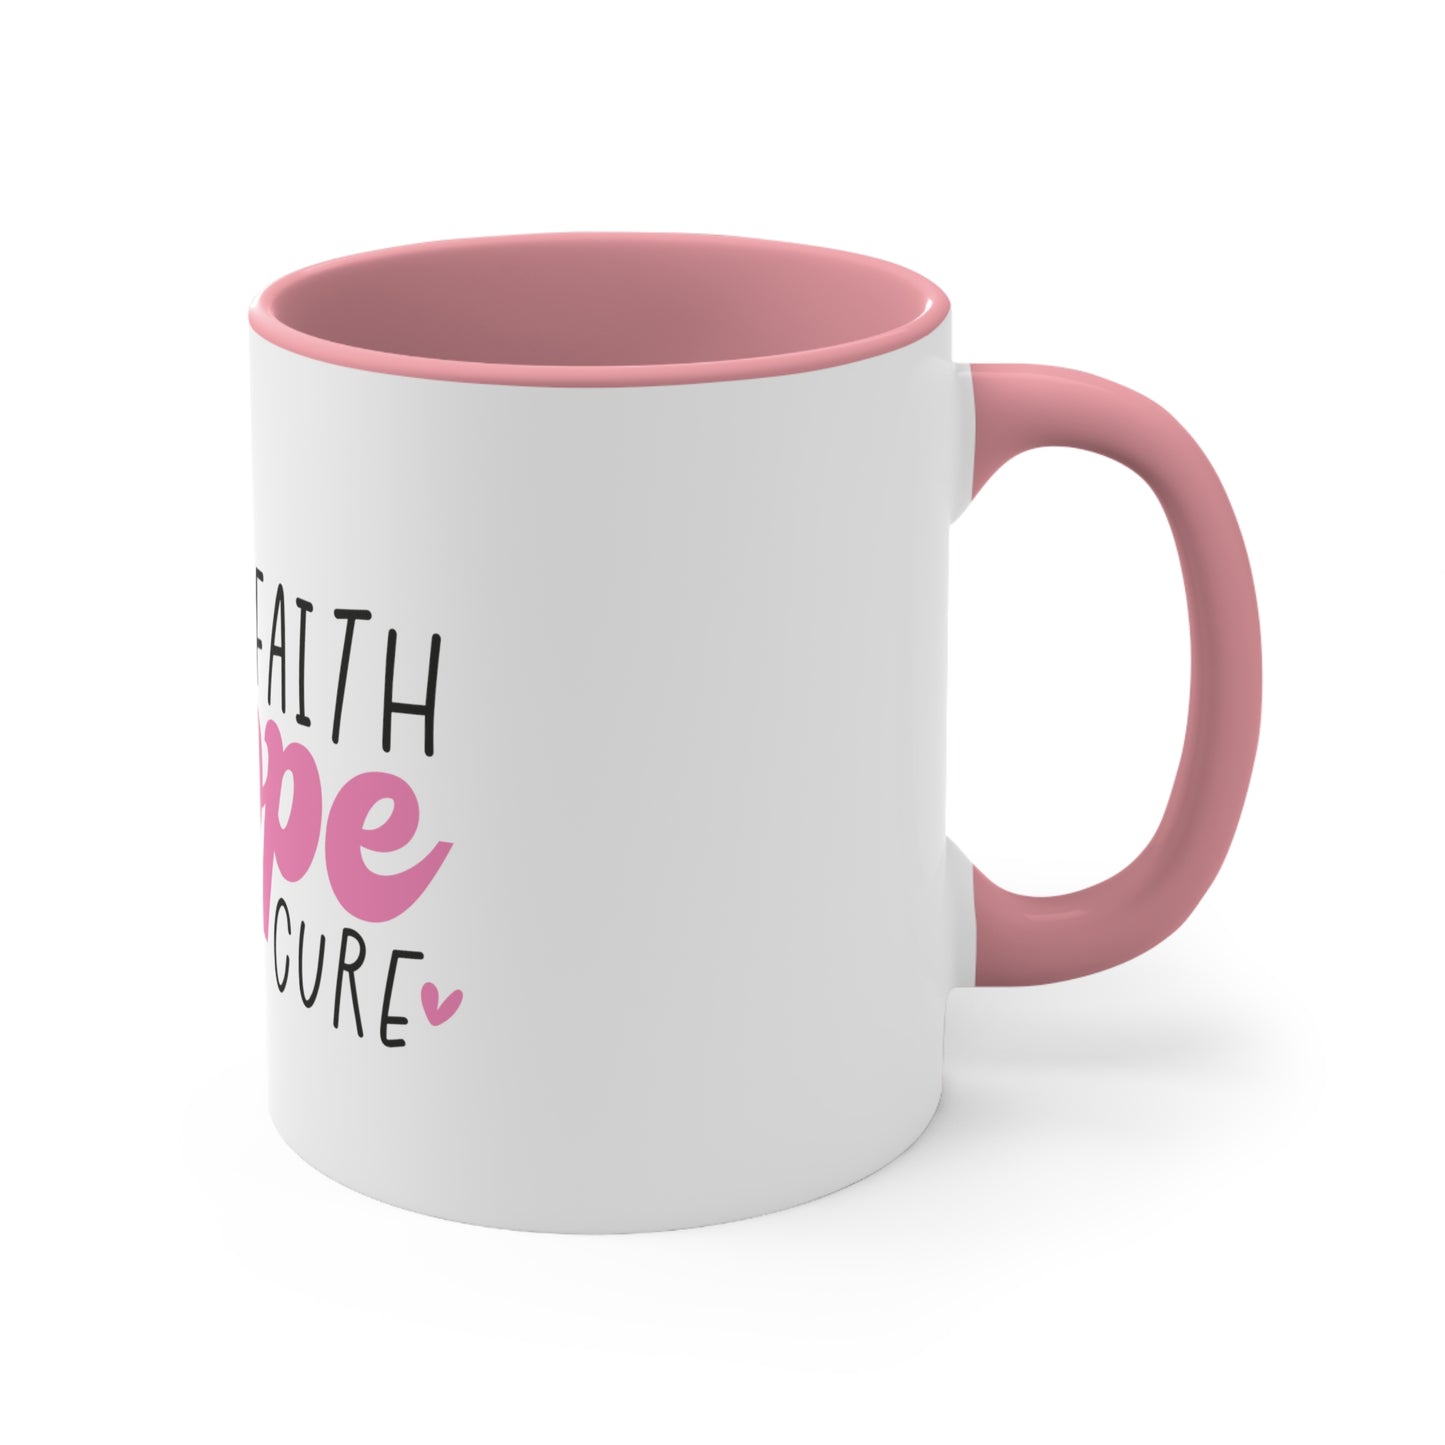 Faith Hope Cure - Accent Coffee Mug, 11oz